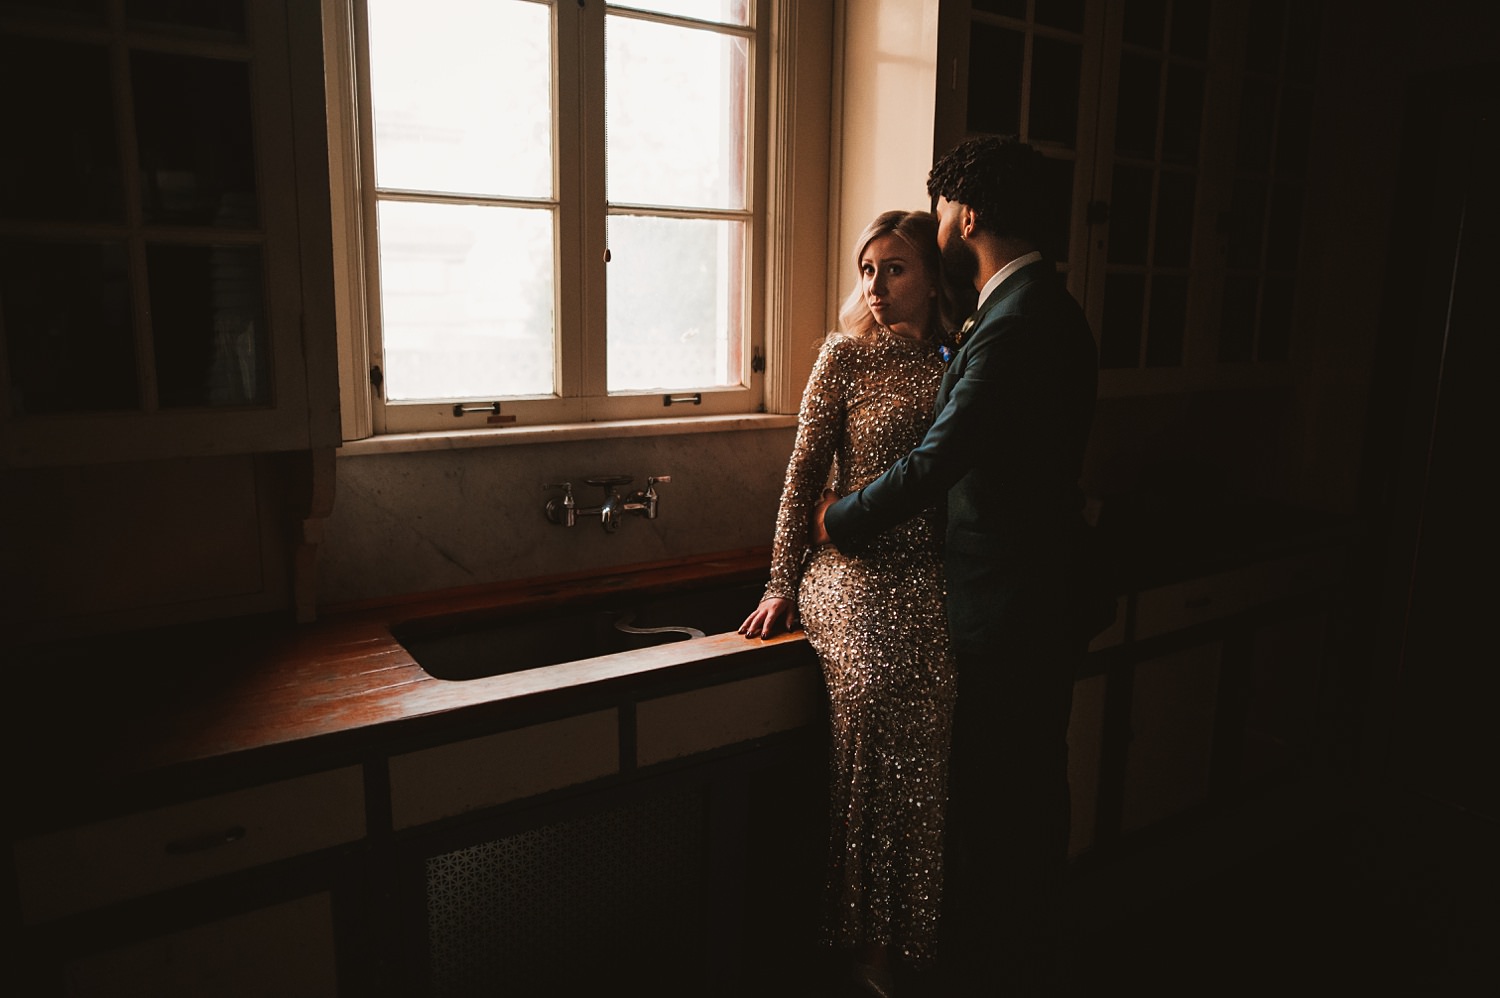 Villa Terrace Milwaukee Wedding Photography - Bride and groom romantic session